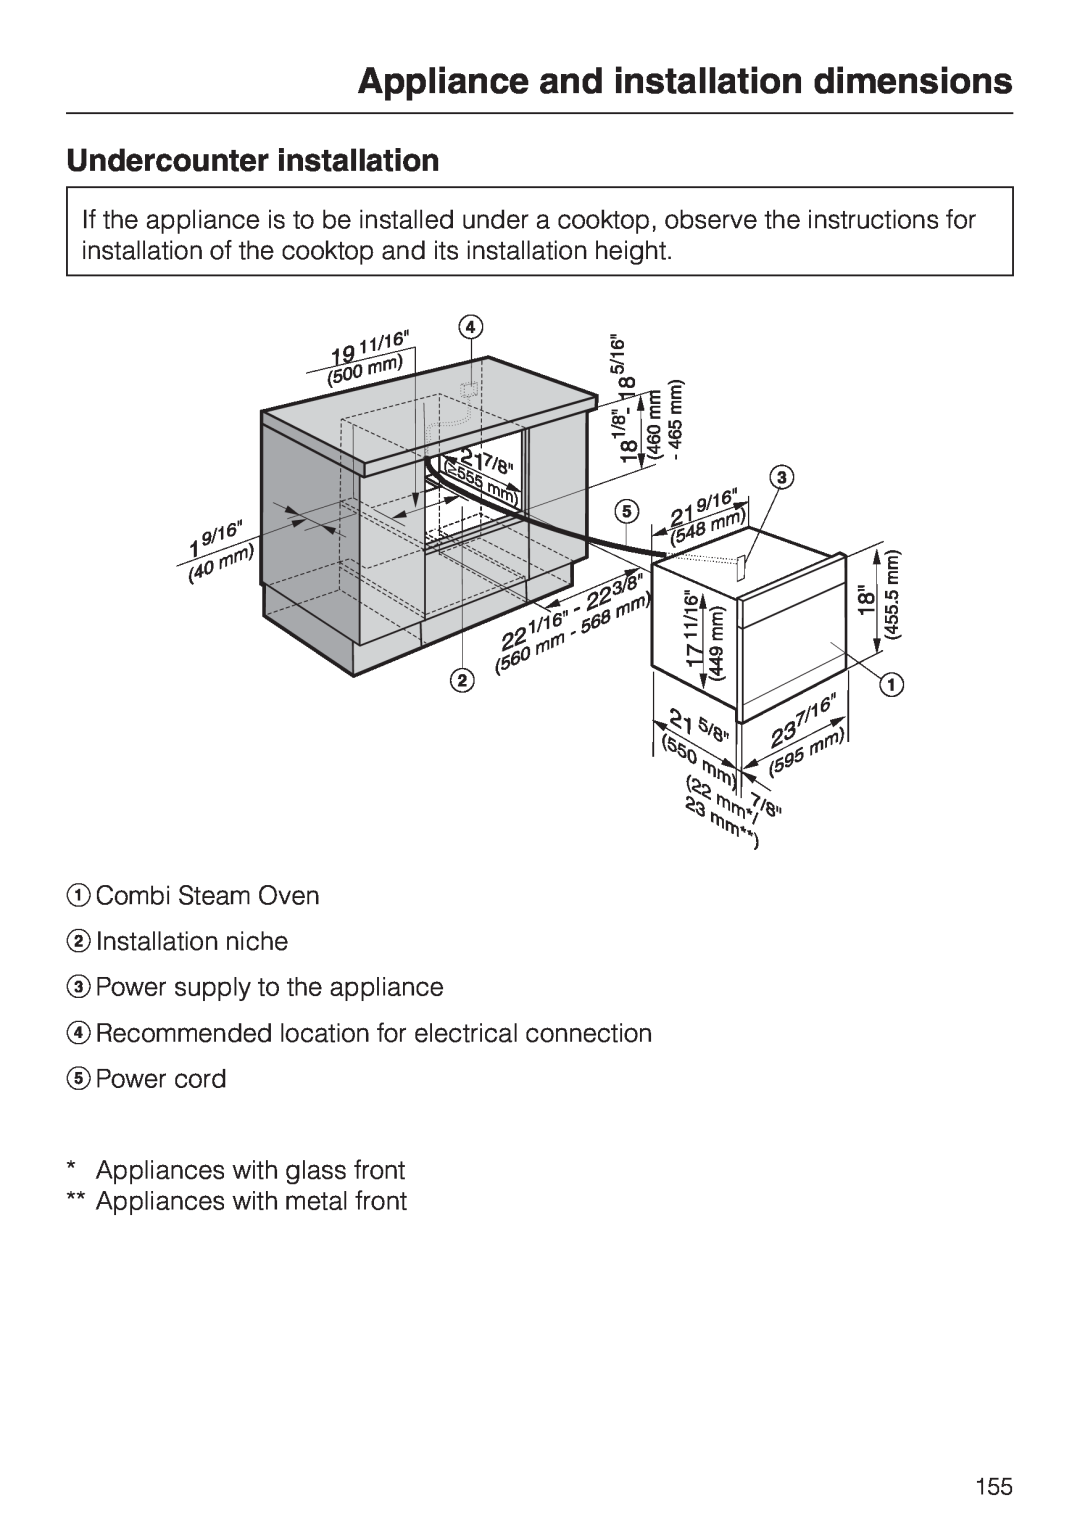 Miele 09 855 050 Undercounter installation, Appliance and installation dimensions, Combi Steam Oven Installation niche 